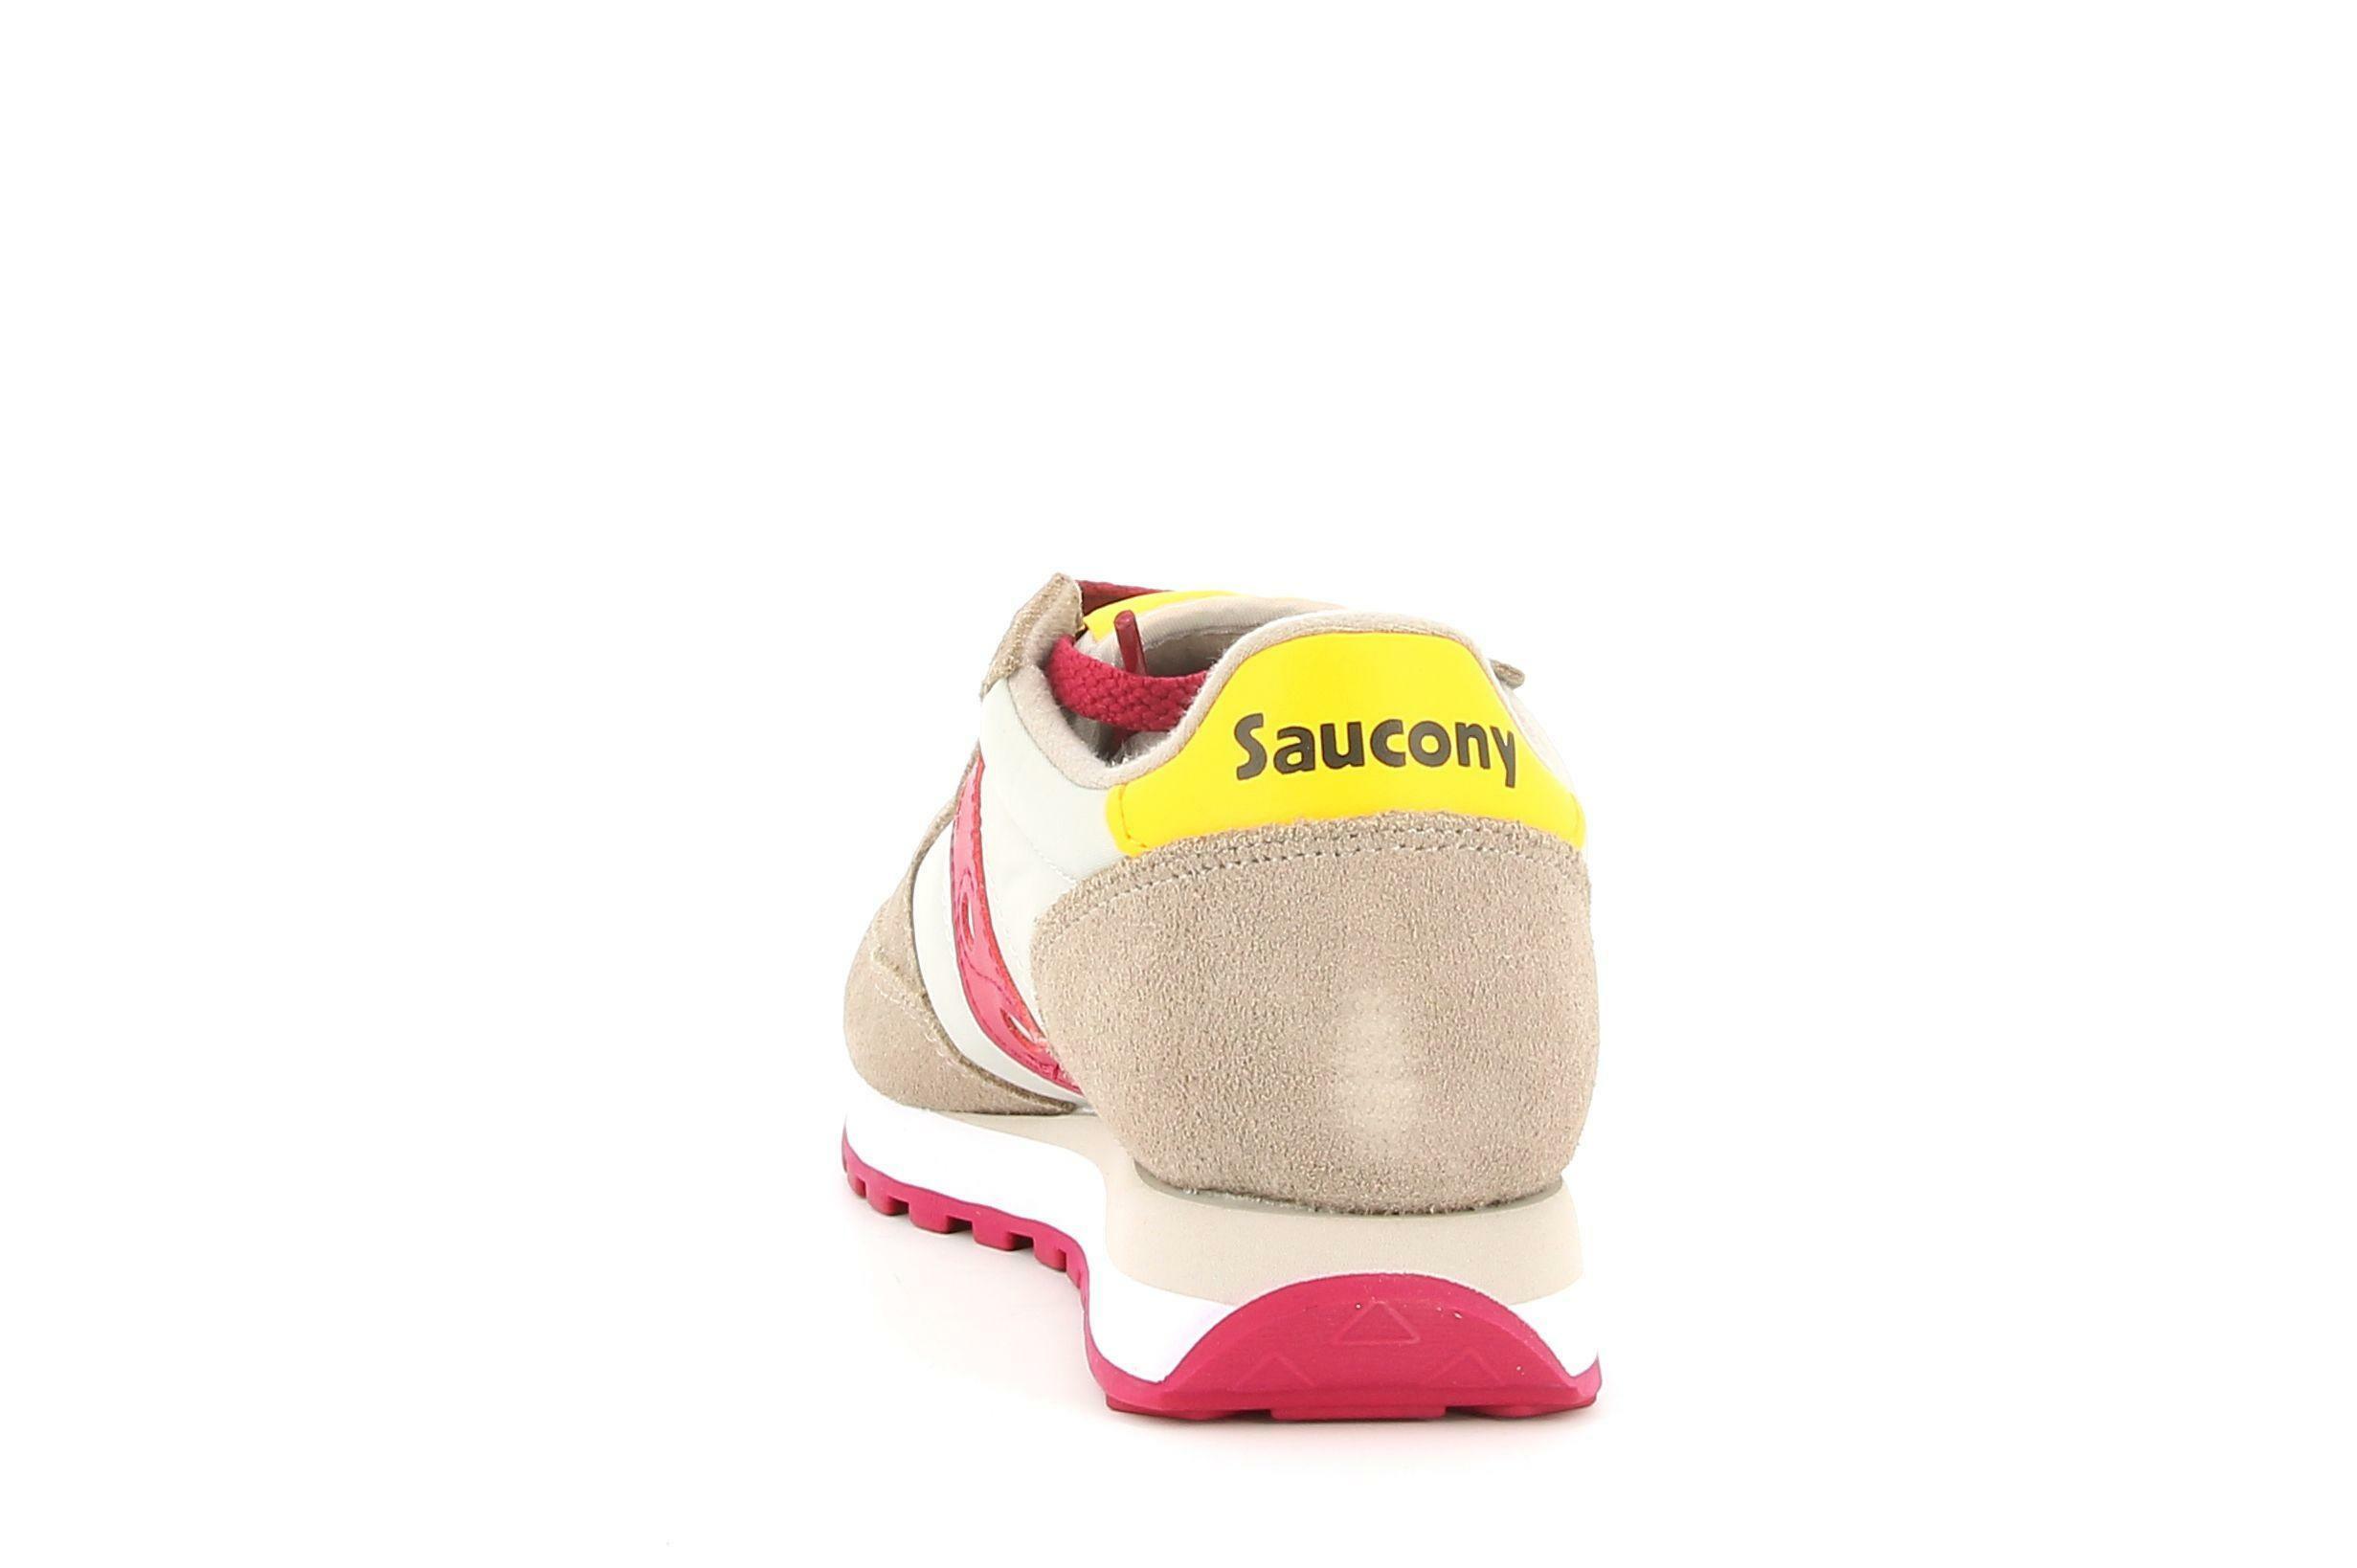 saucony saucony sneakers sportiva s1044-606 bassa donna rossa